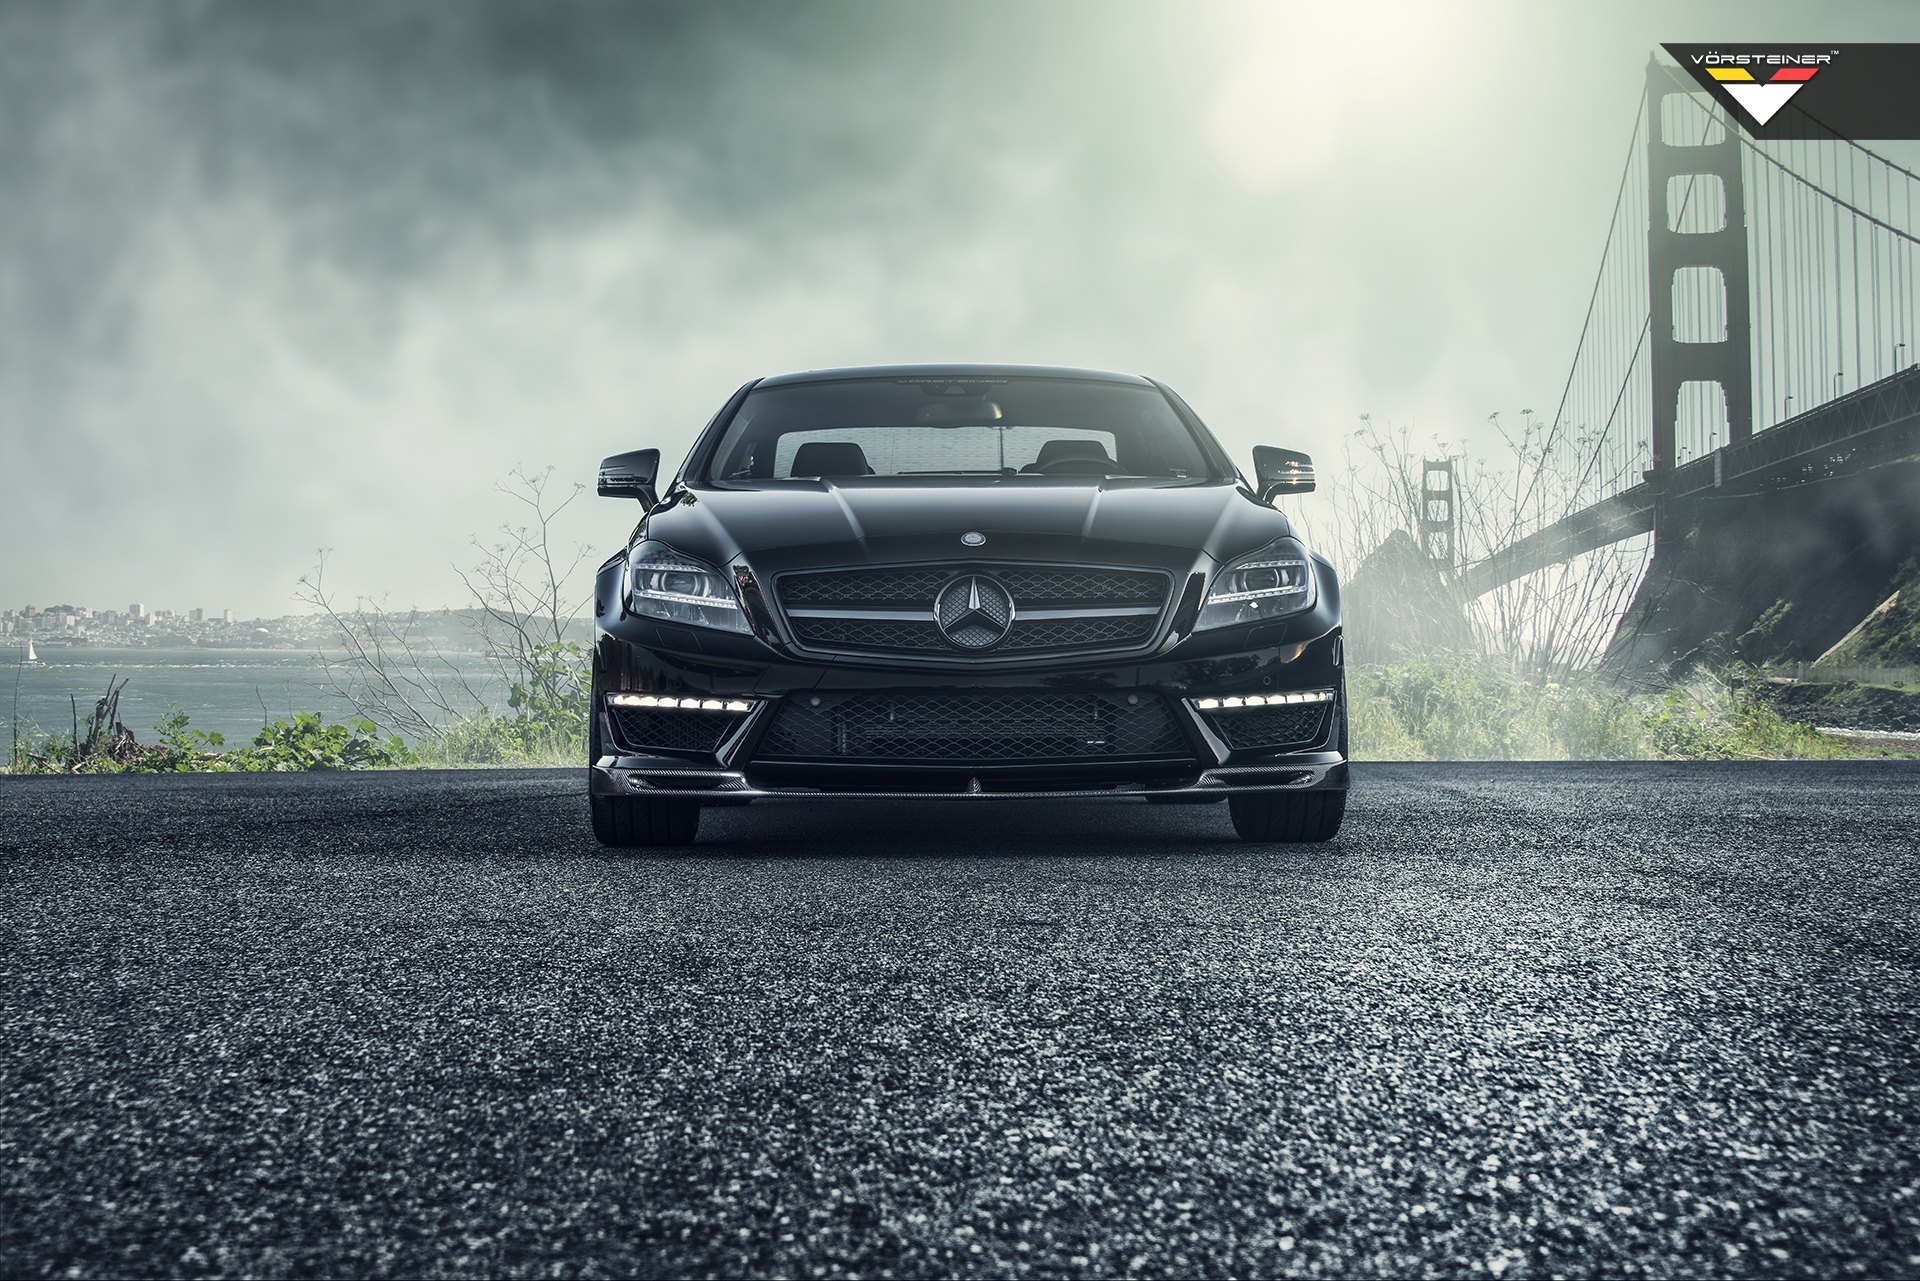 Carbon Fiber Front Lip on Black Mercedes CLS Class - Photo by Vorstiner